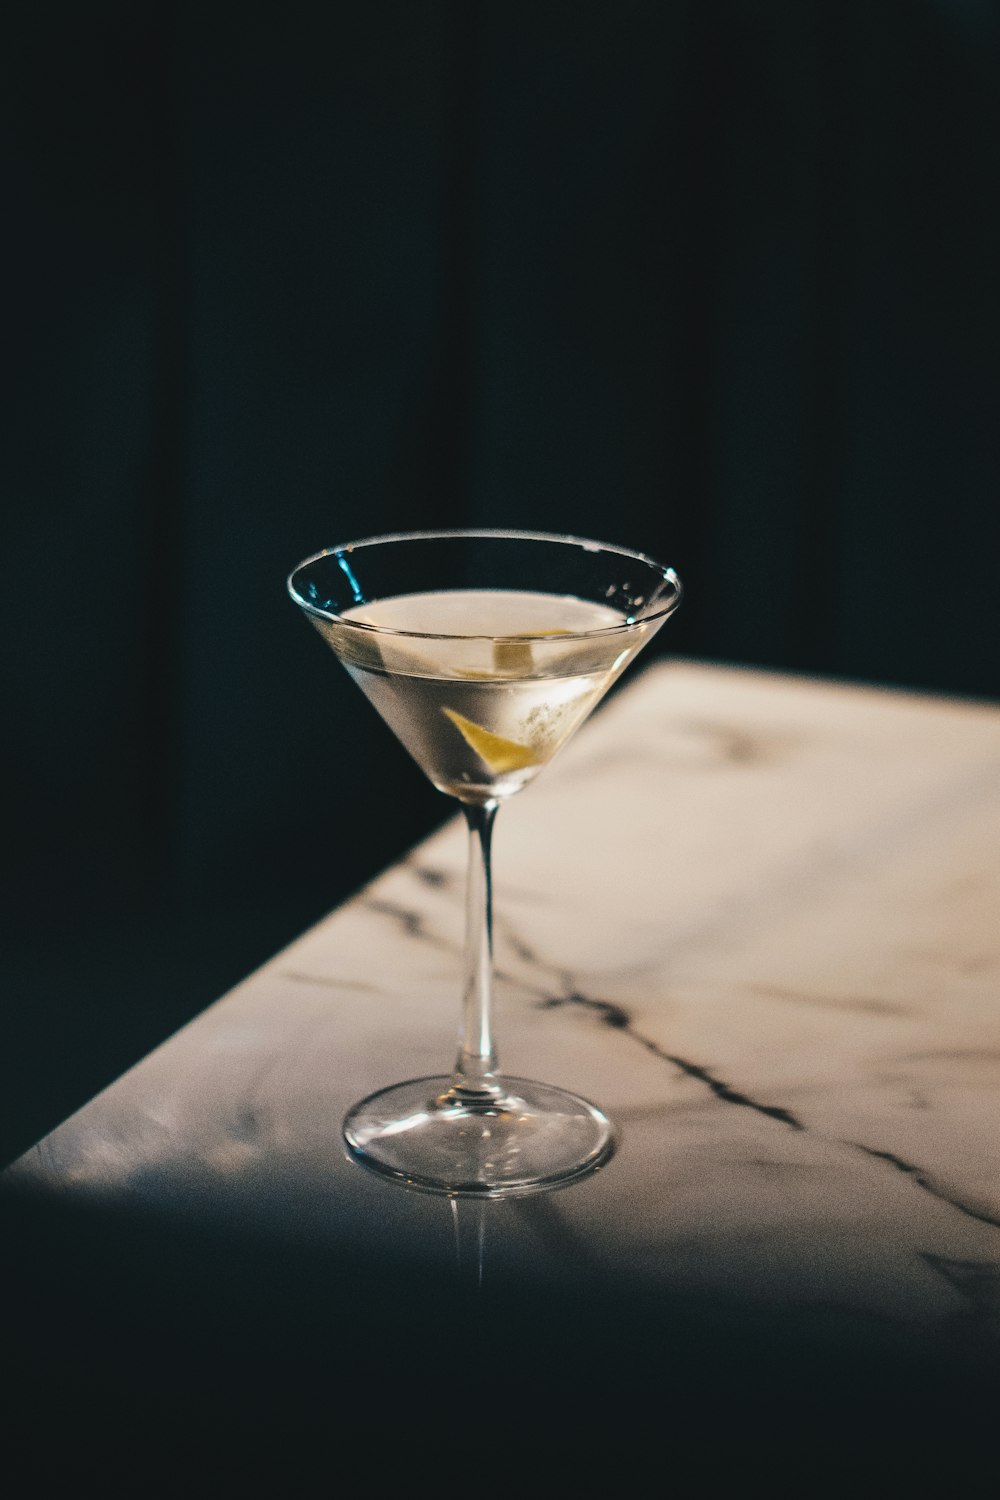 Una copa de martini sentada encima de una mesa